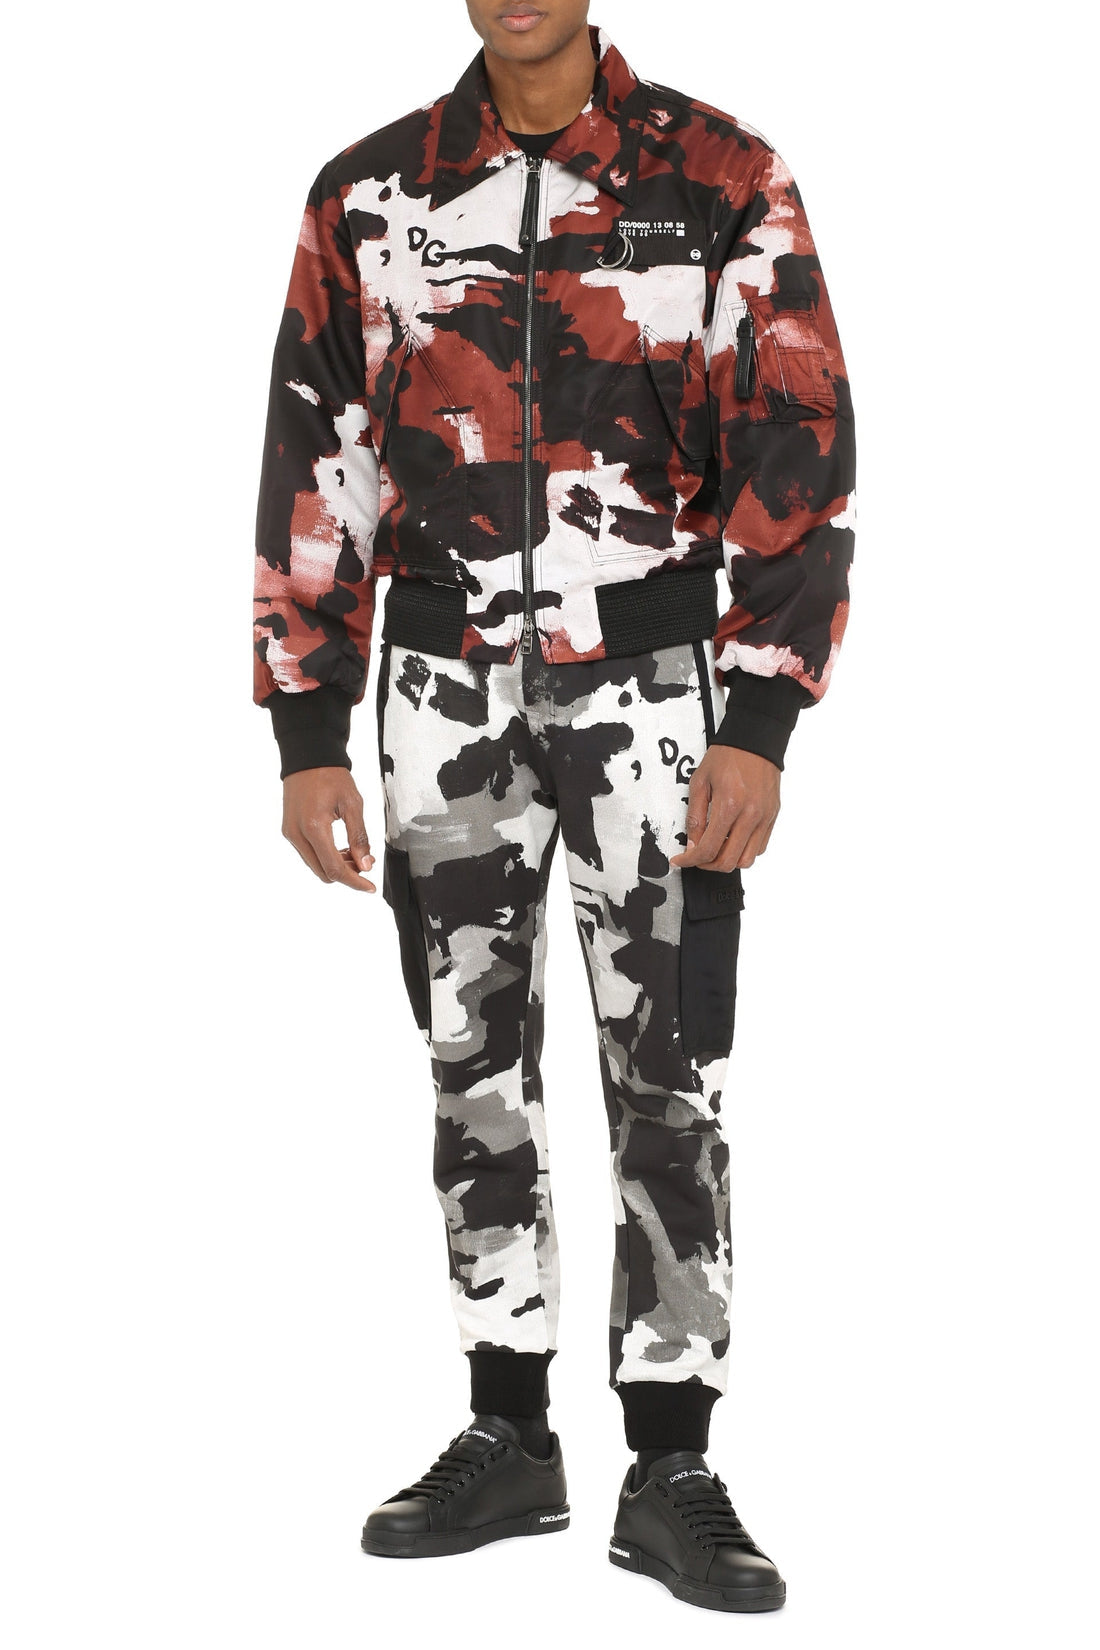 Dolce & Gabbana-OUTLET-SALE-Camouflage print nylon bomber jacket-ARCHIVIST